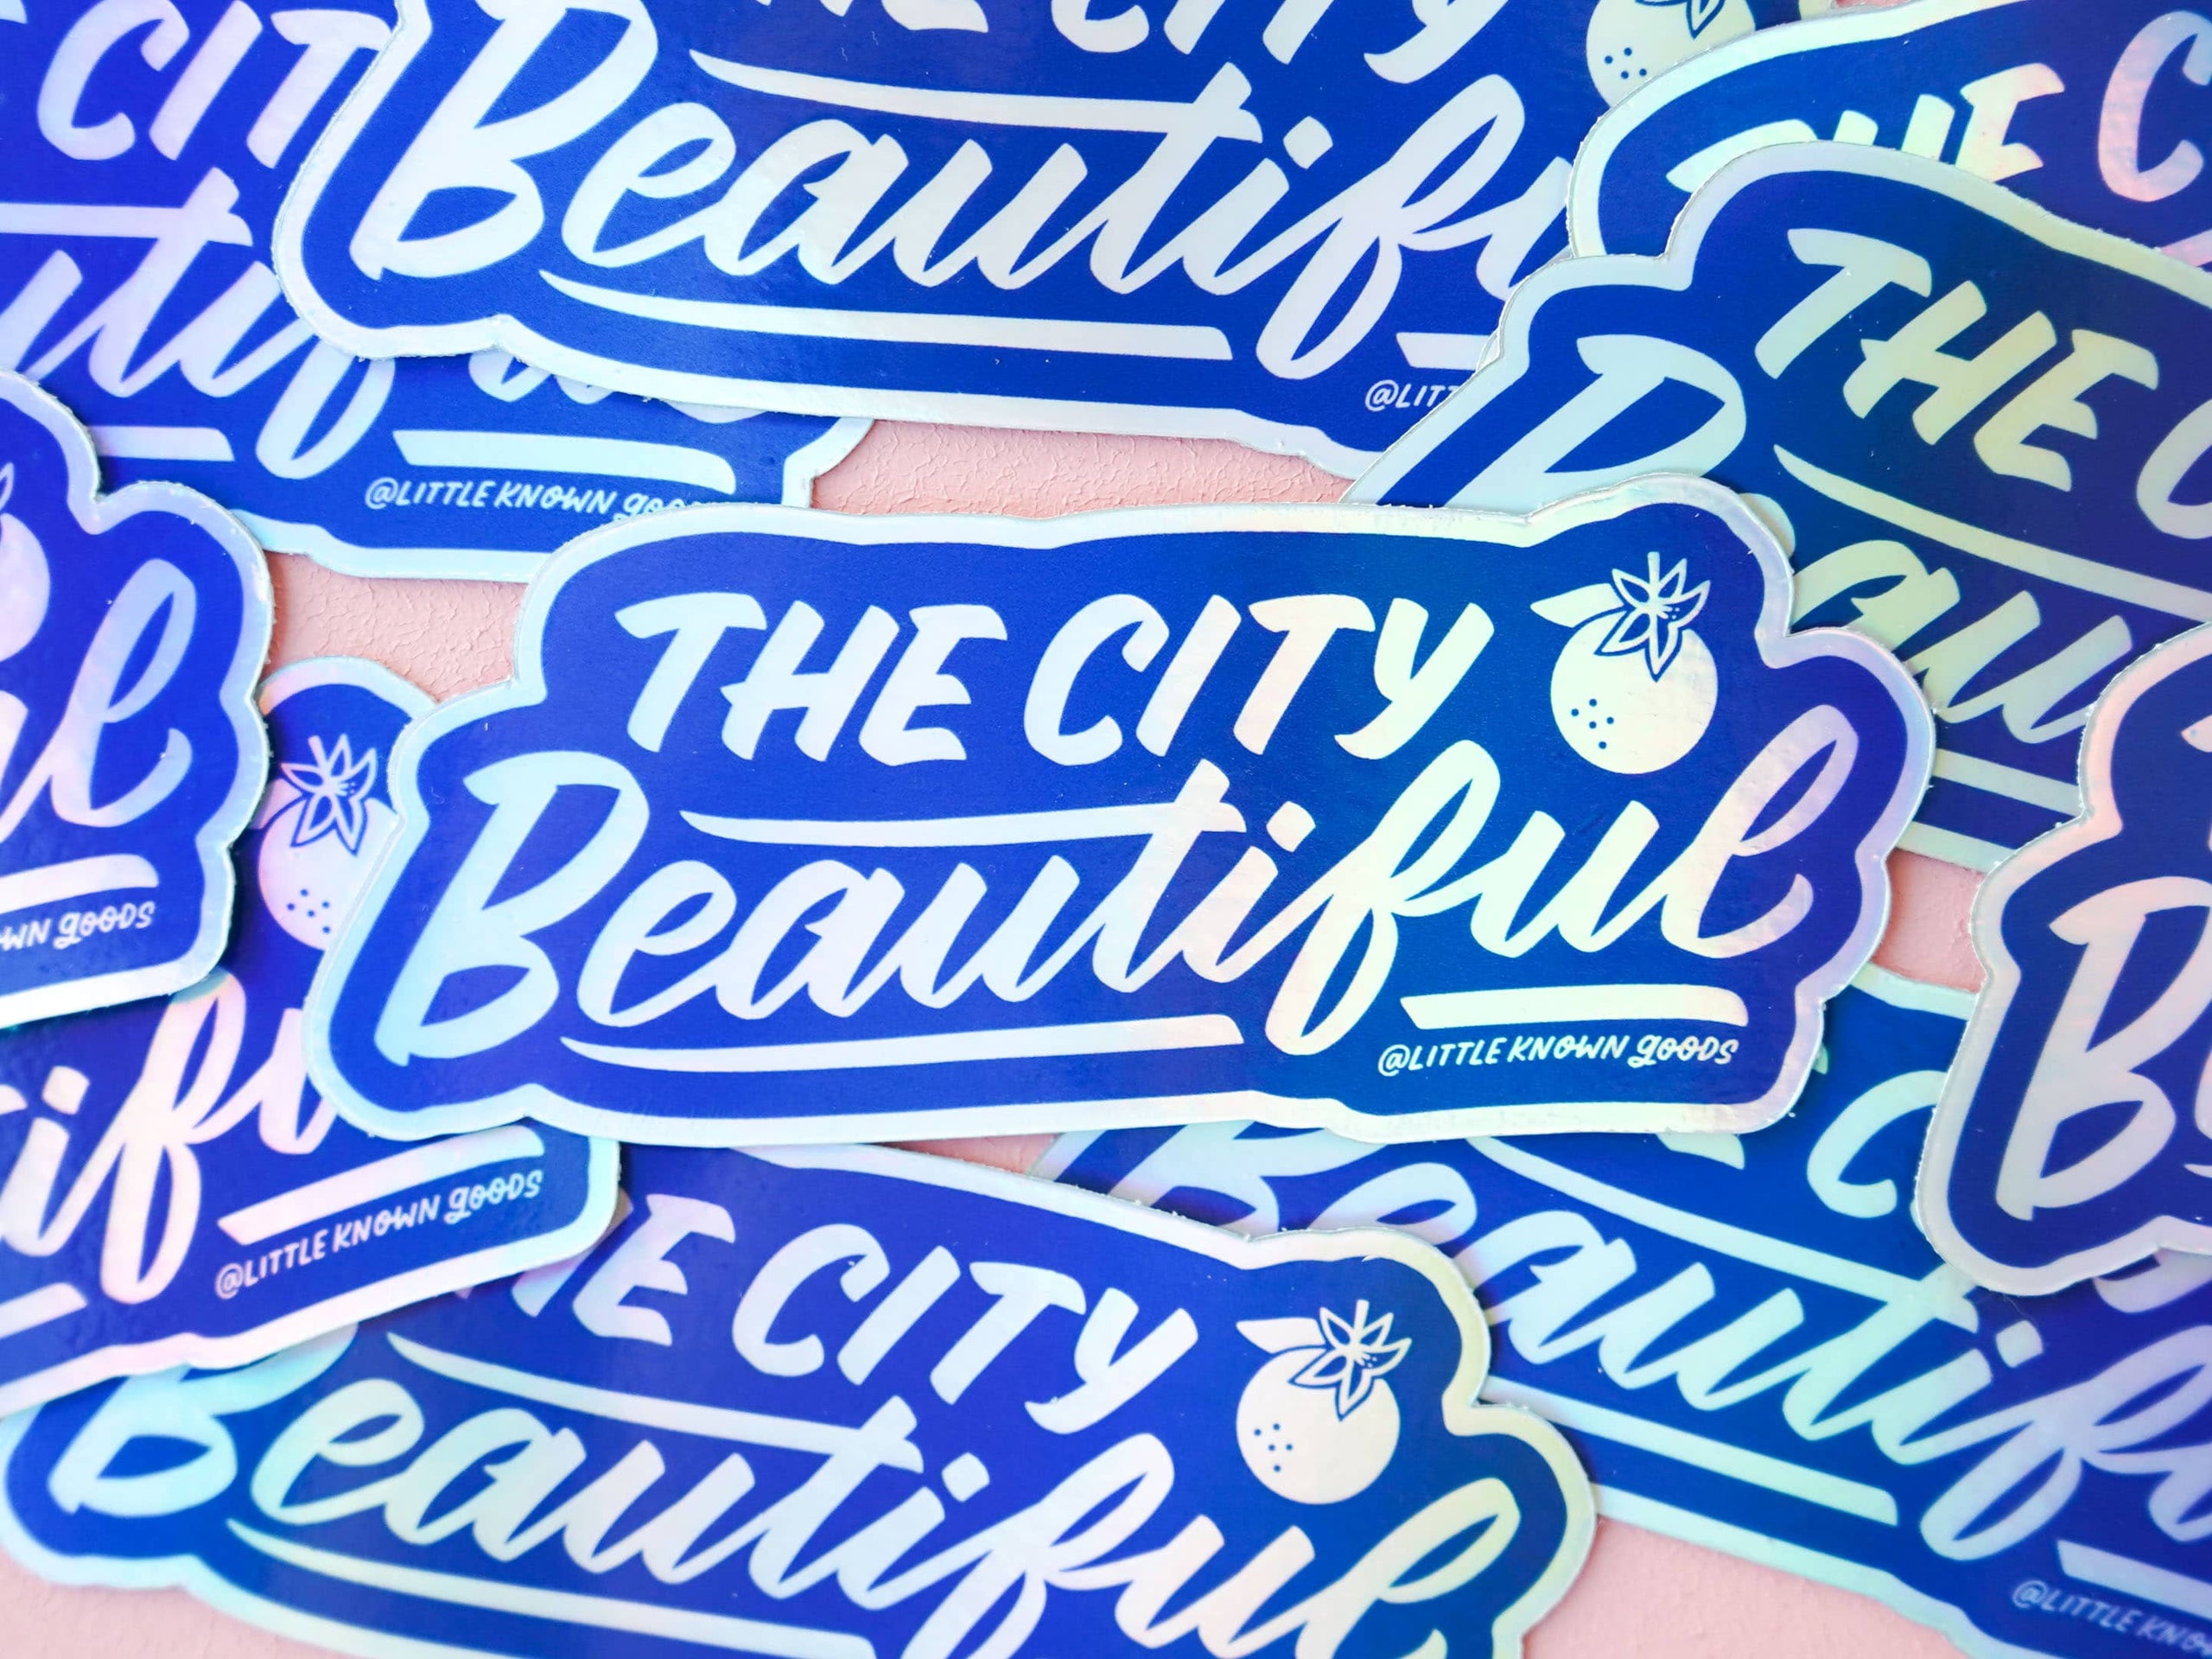 Wholesale — City Beautiful Holographic Sticker